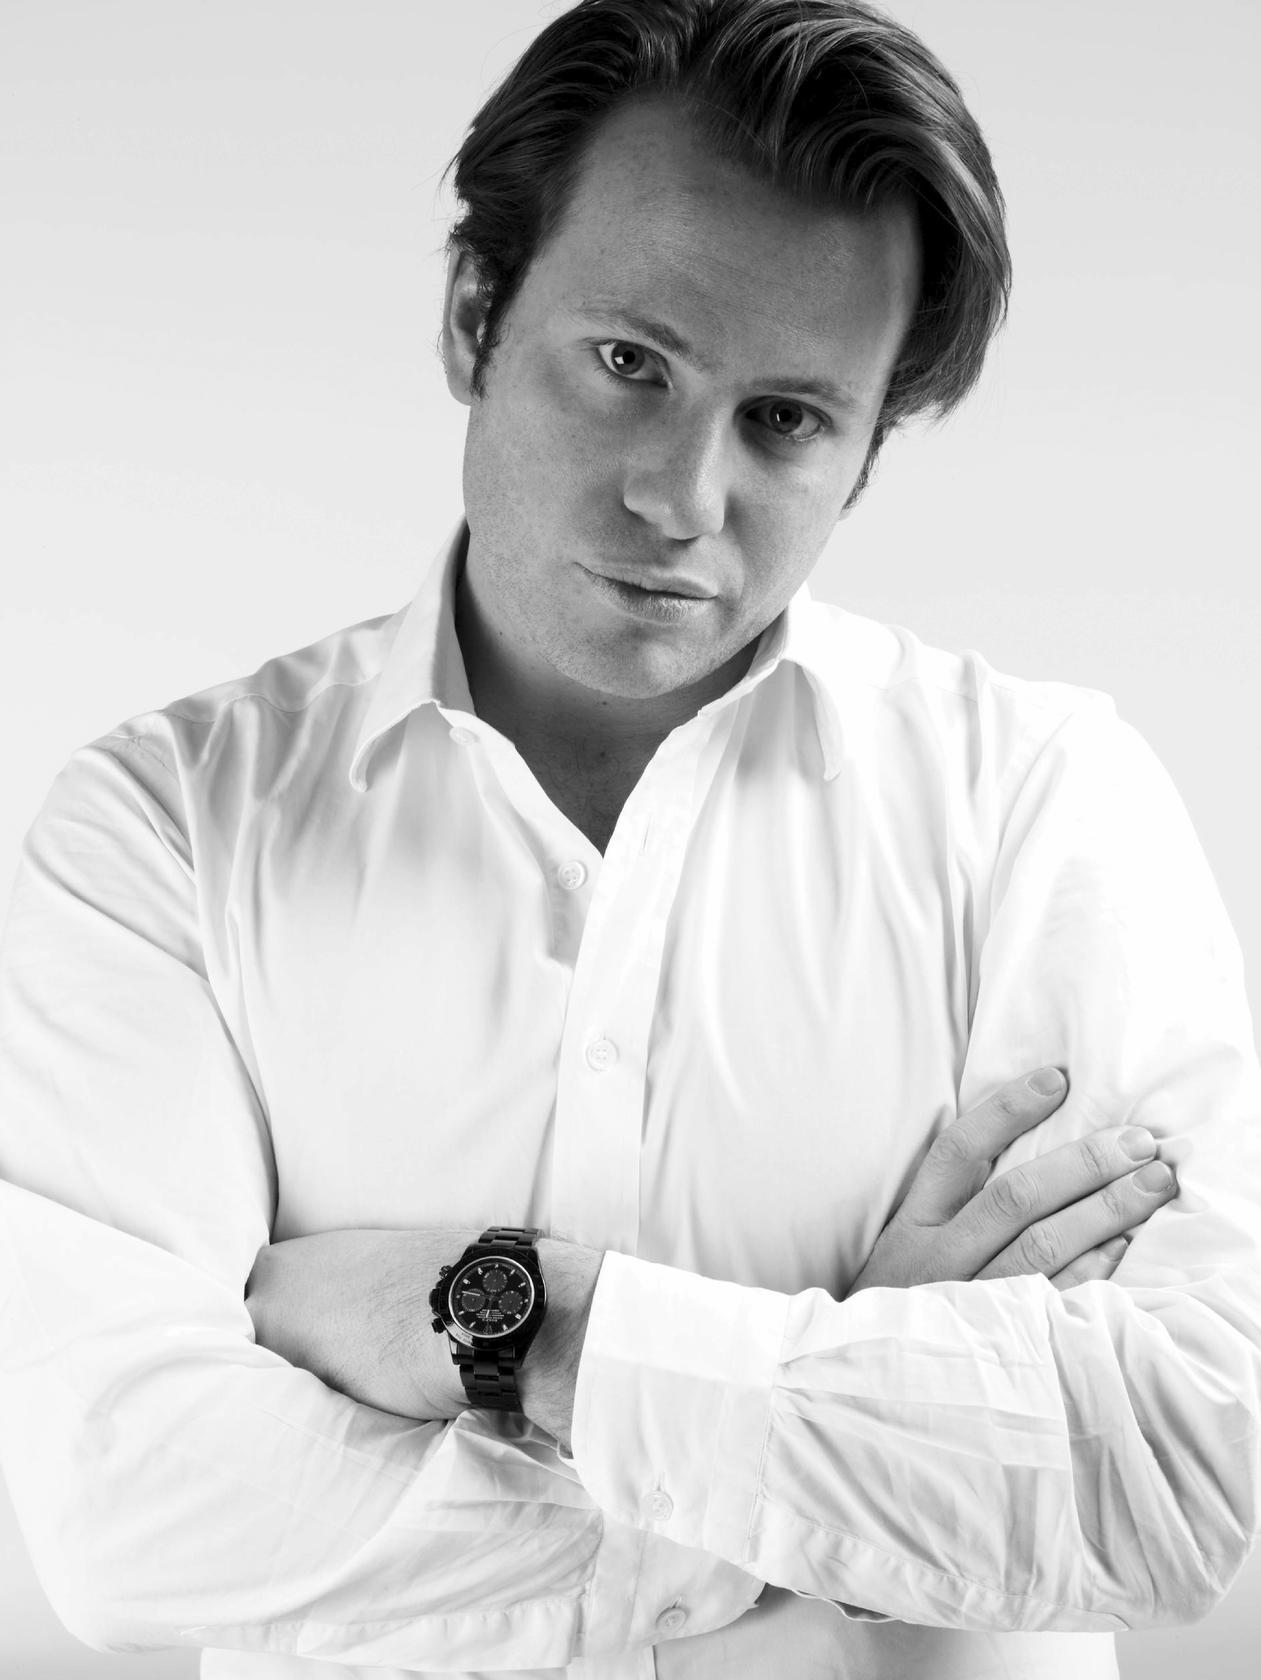 NEW EPISODE 🚨 Luxury watch entrepreneur, George Bamford, talks about